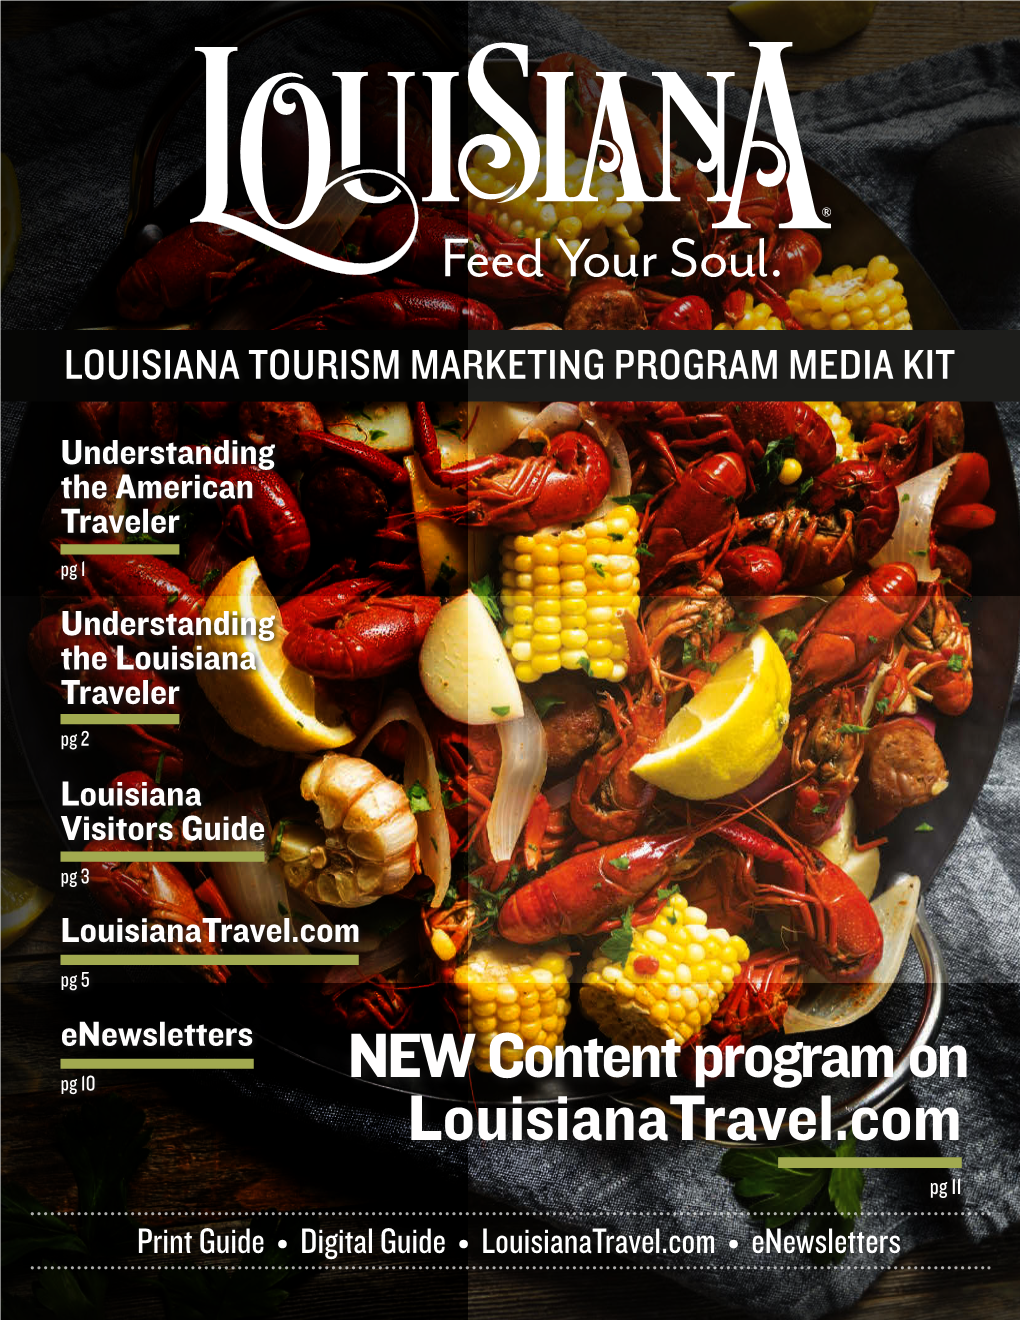 Louisiana Tourism Marketing Program Media Kit